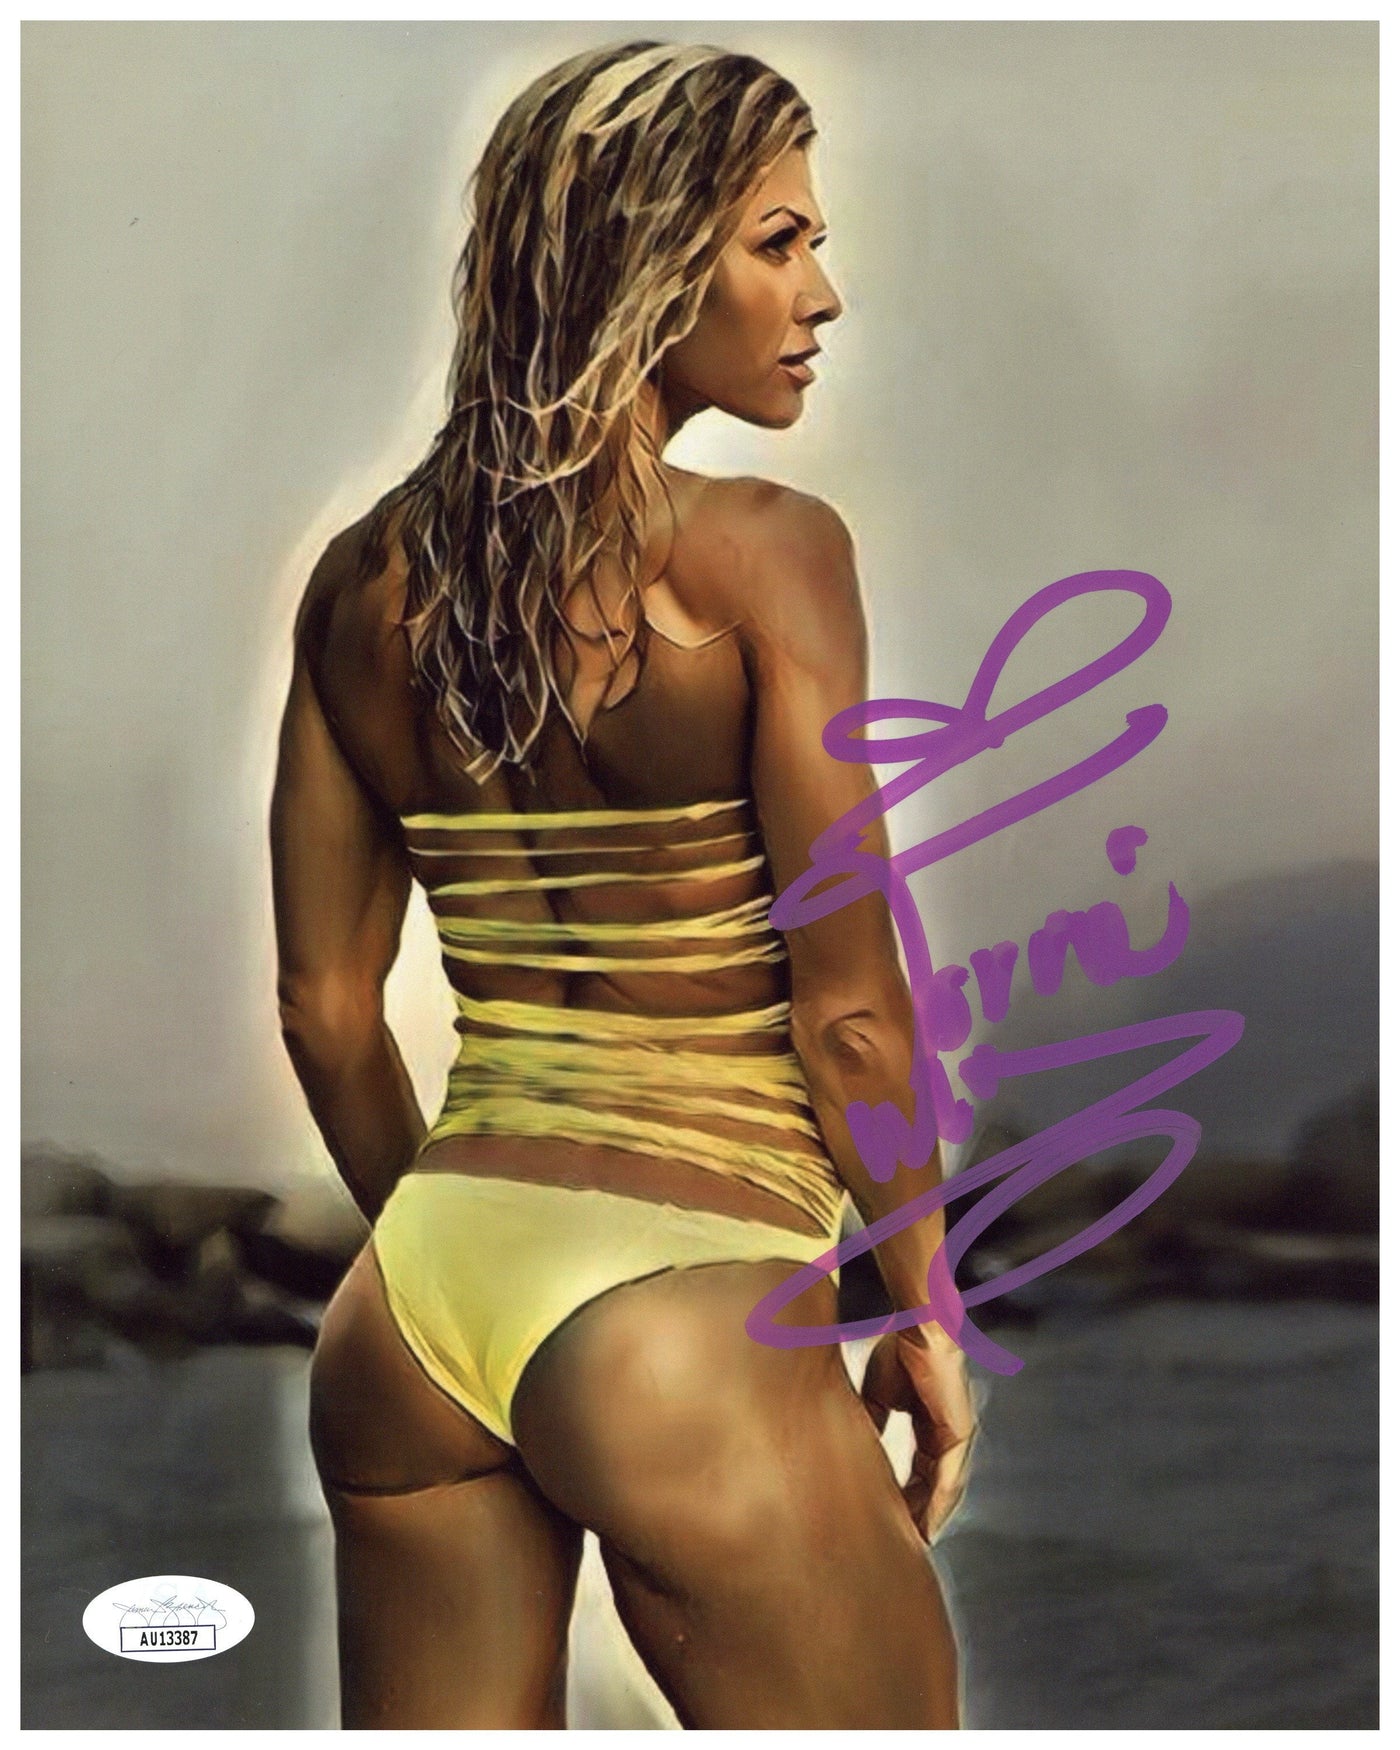 Torrie Wilson Signed 8x10 Photo WWE WWF DIVA Autographed JSA COA